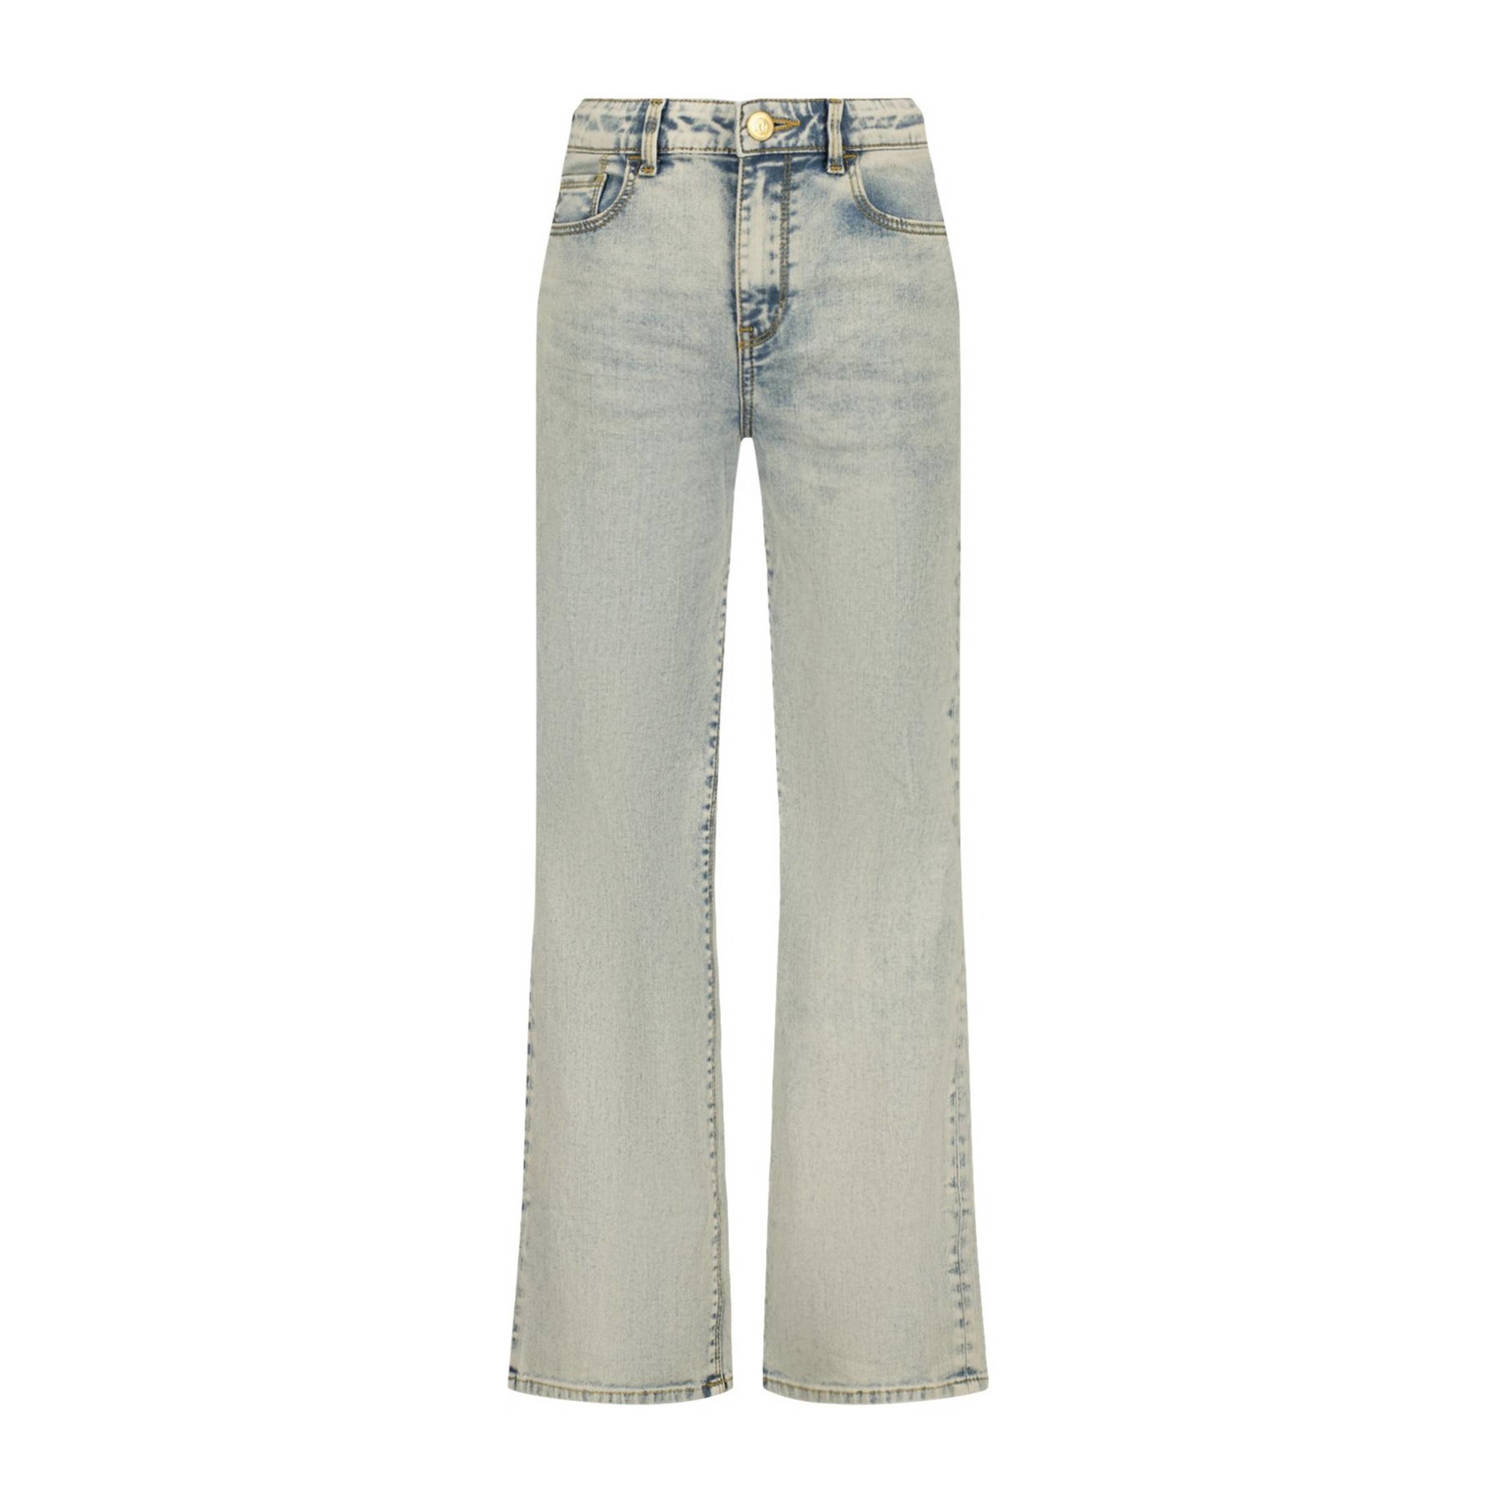 Raizzed wide leg jeans Mississippi light blue stone Blauw Meisjes Stretchdenim 128